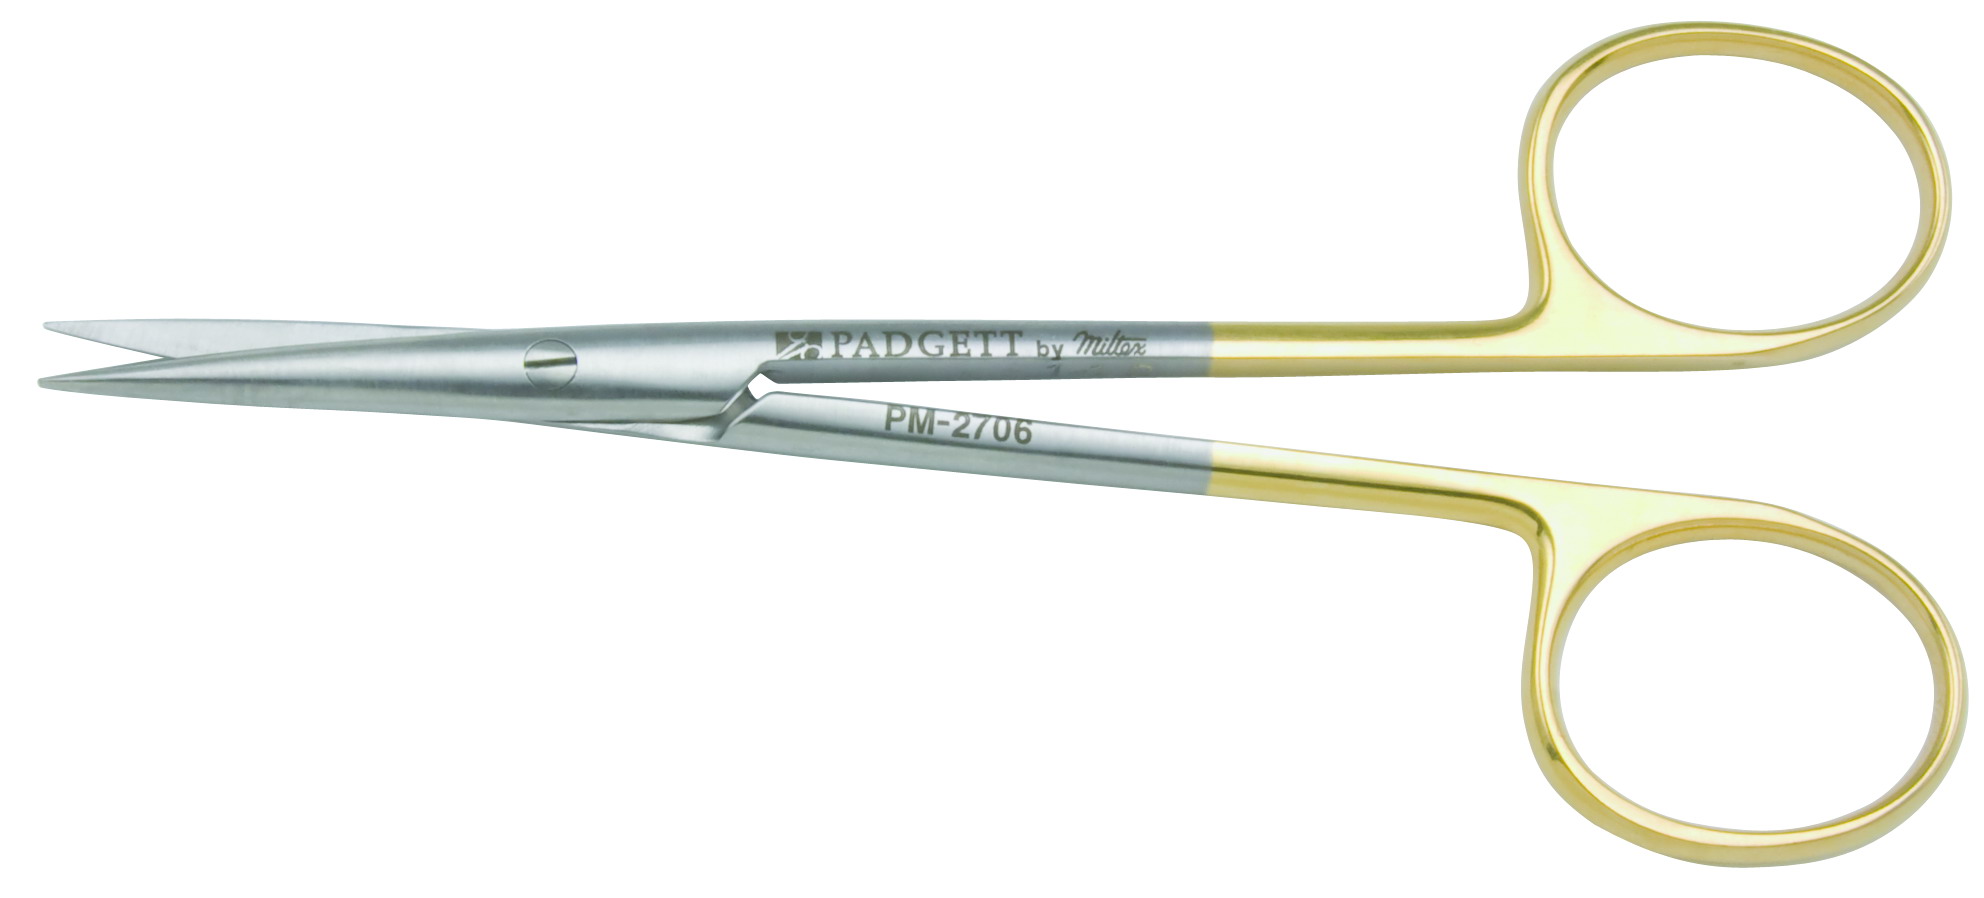 padgett-iris-scs-straight-tungsten-carbide-sharp-sharp-4-1-2-114mm-length-pm-2706-miltex.jpg